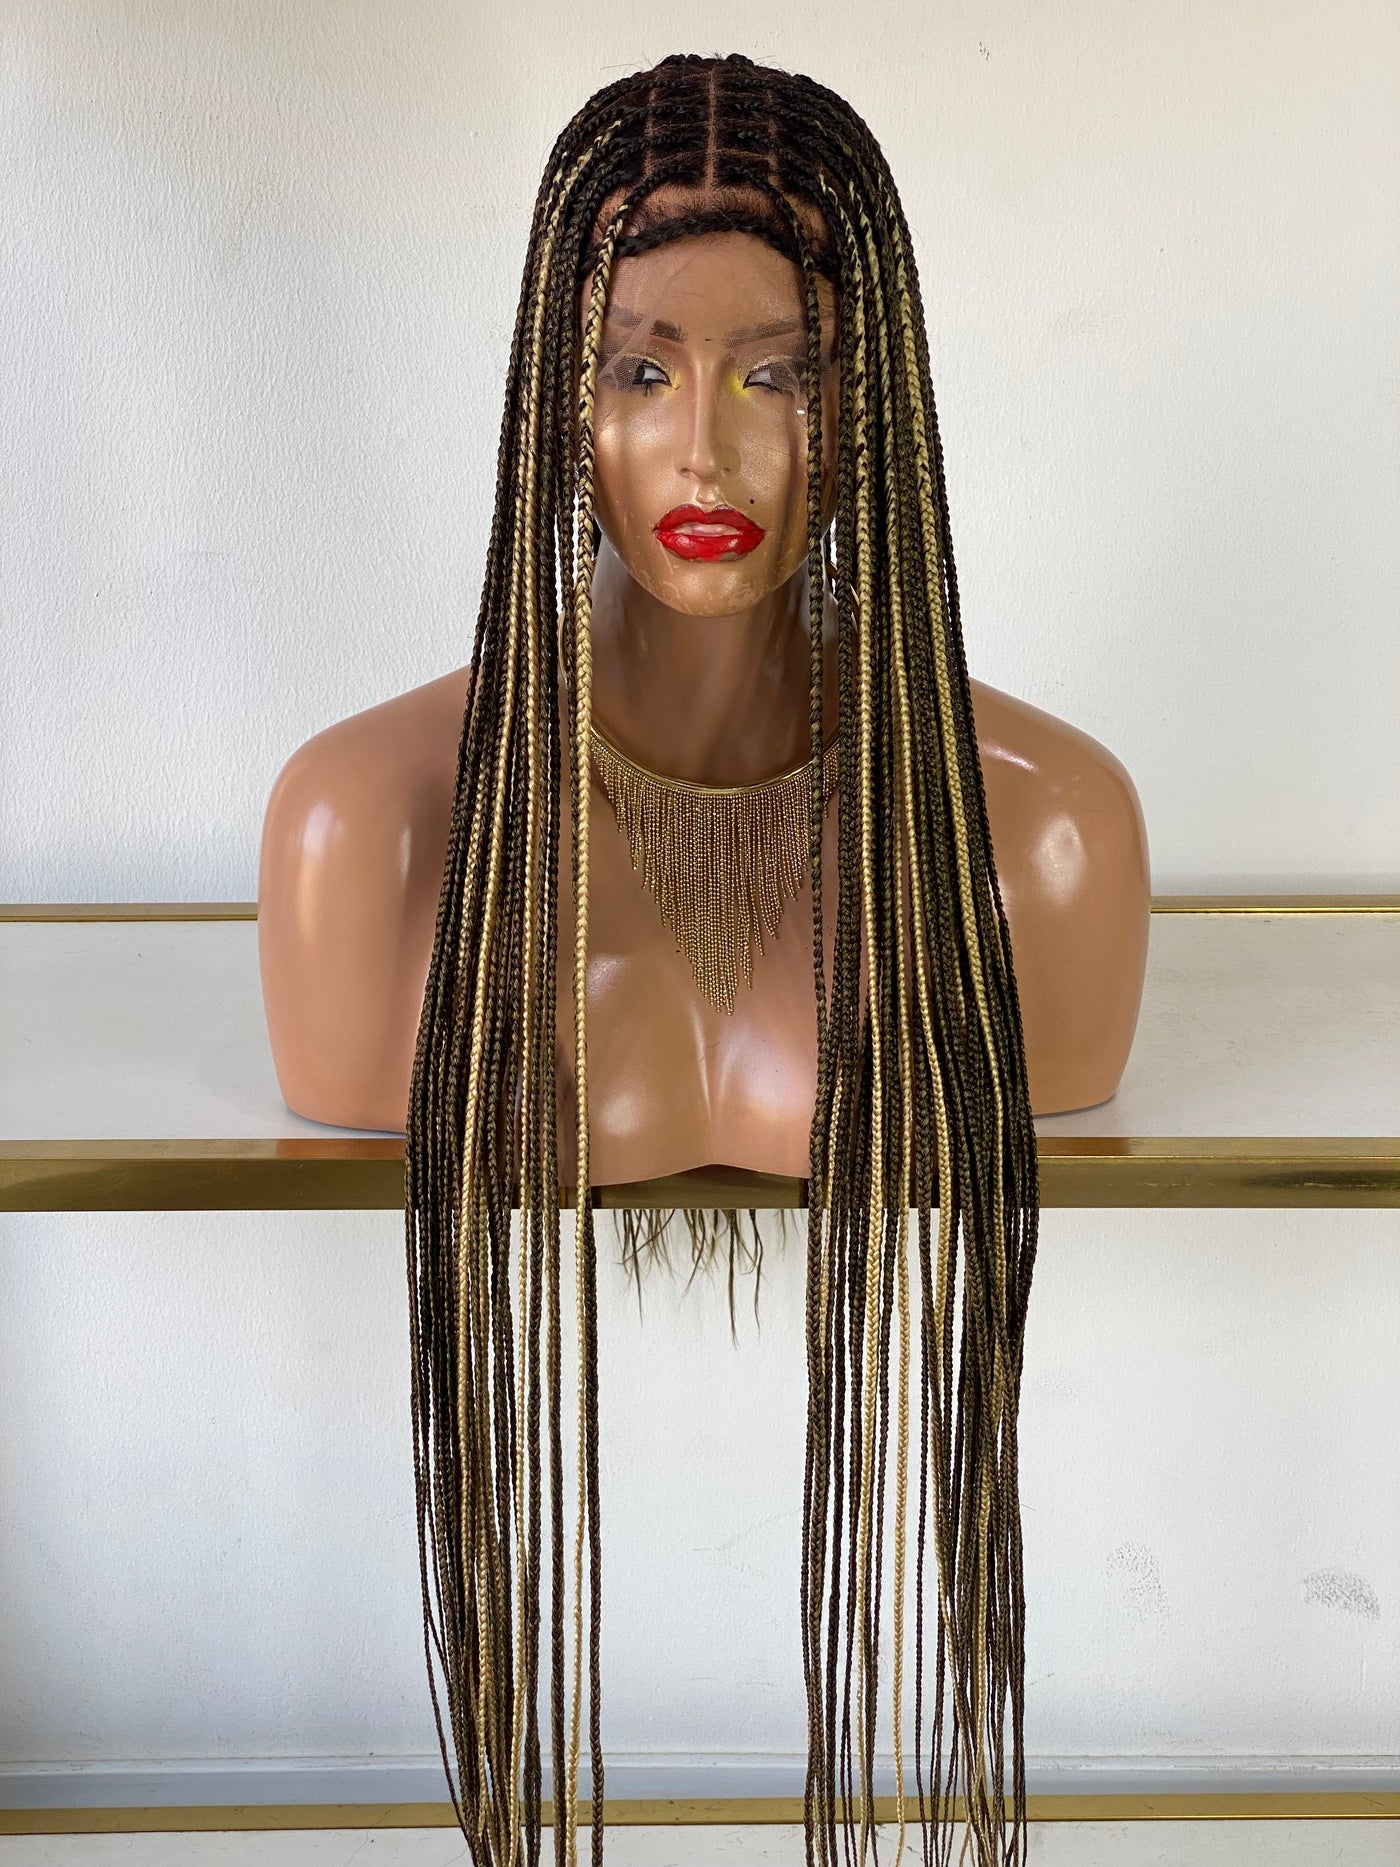 BOHEMIAN KNOTLESS BRAID WIG - VIP LUX COLOR - Poshglad Braided Wigs